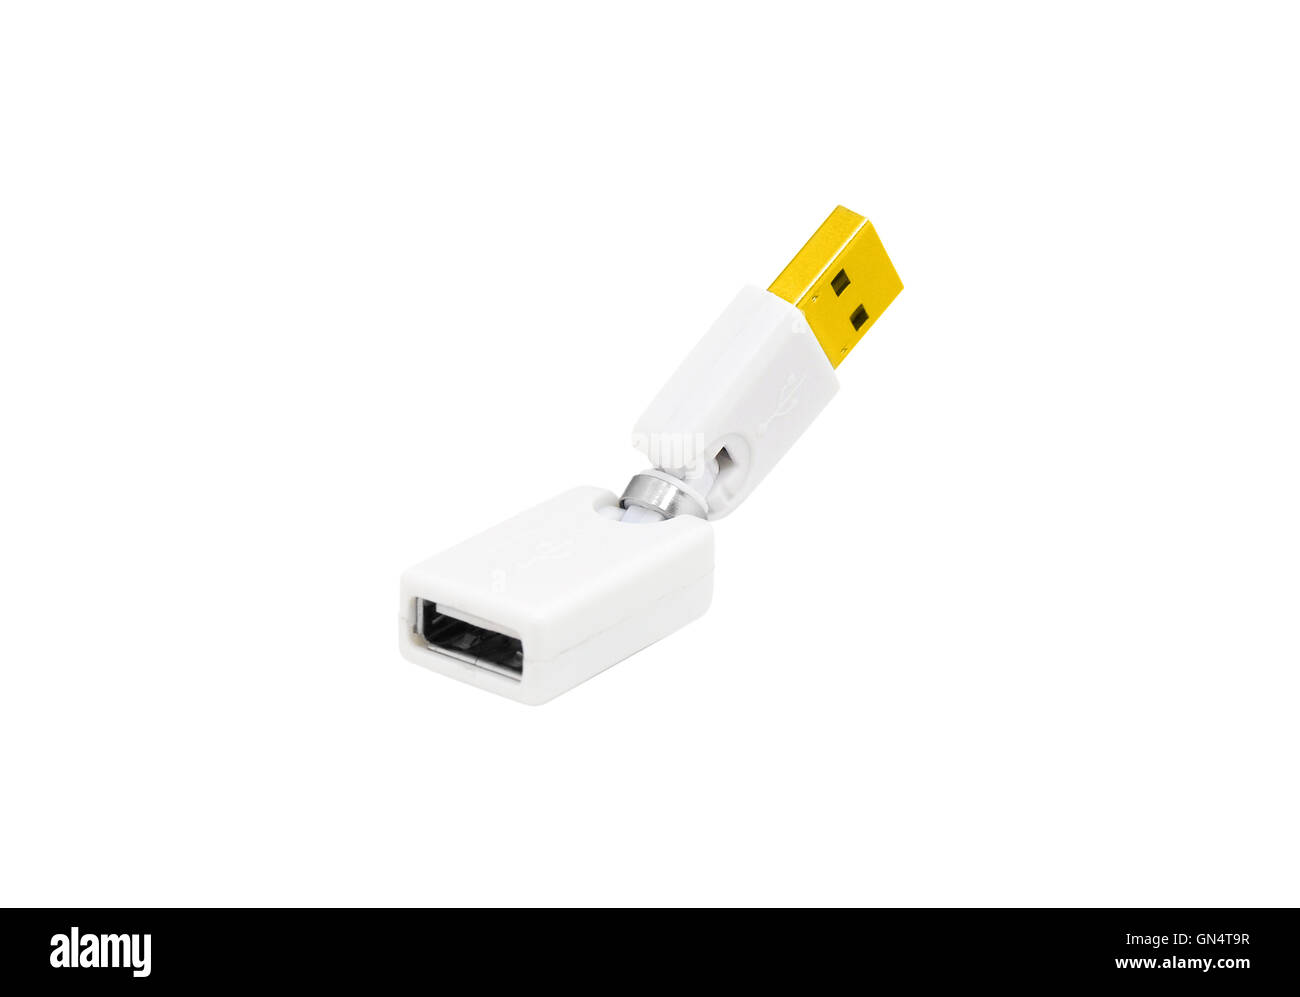 USB adapter isolated on white Stock Photo